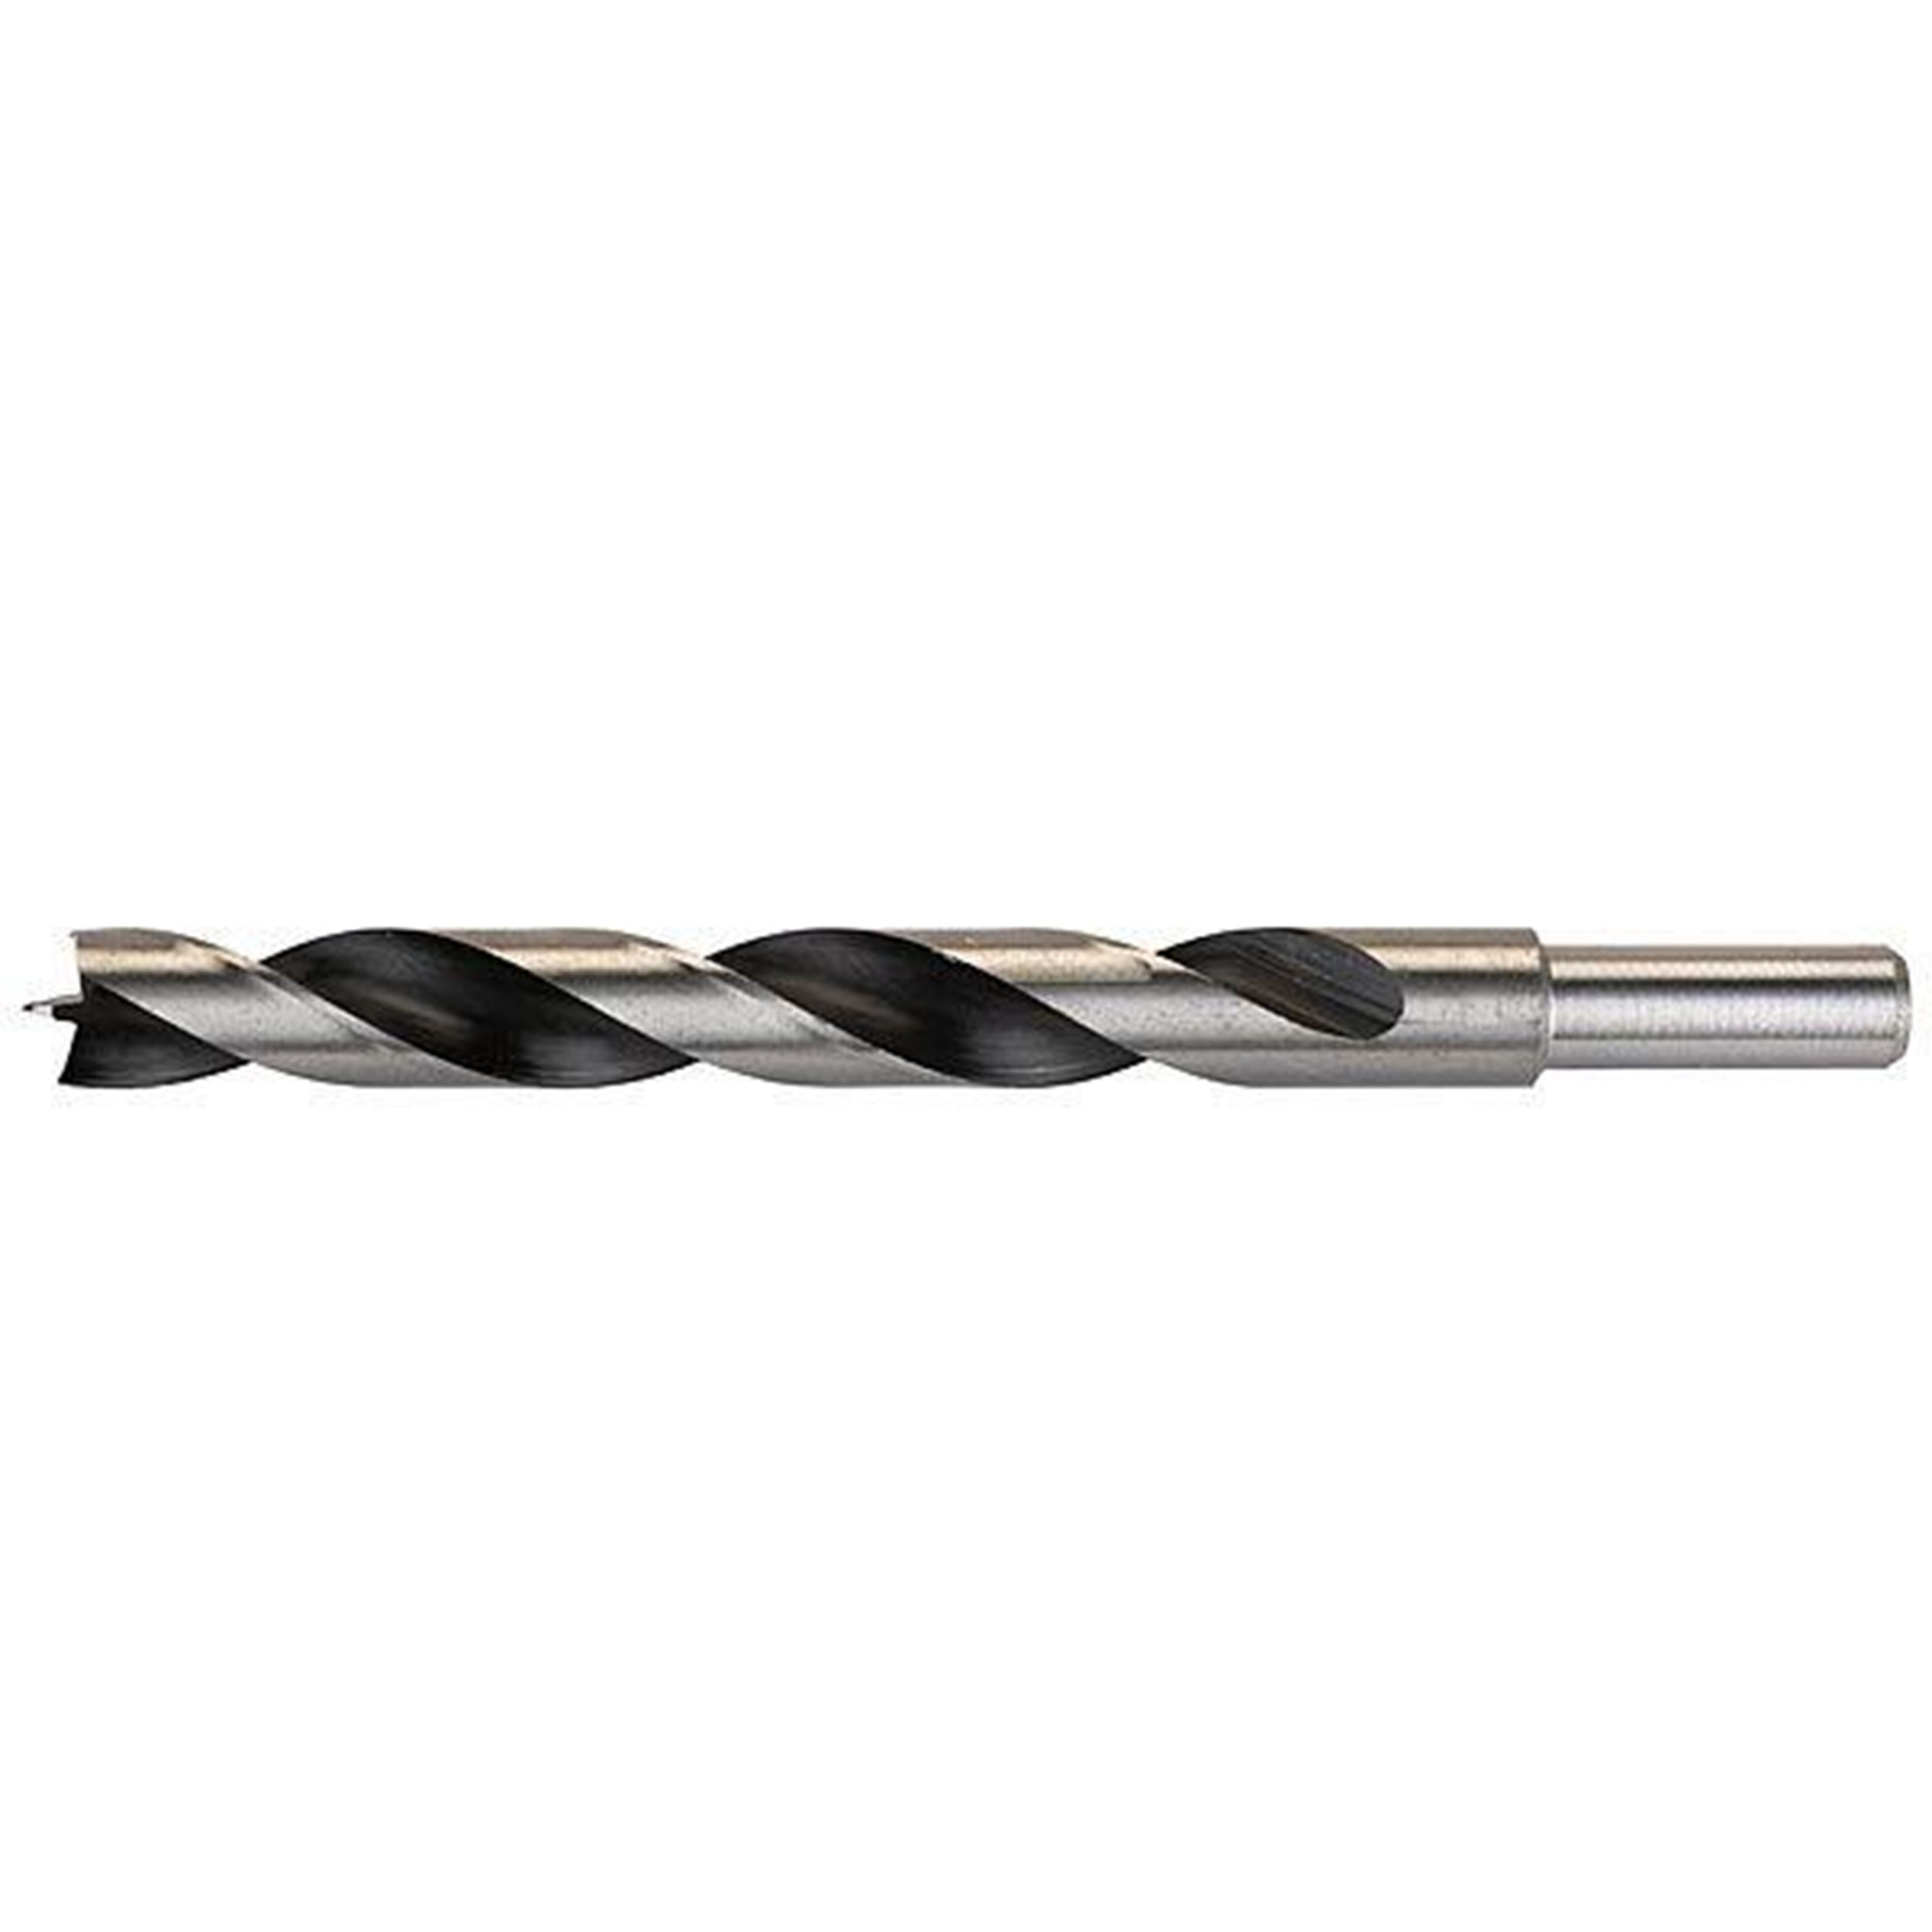 13mm Chrome-vanadium Steel Brad Point Drill Bit